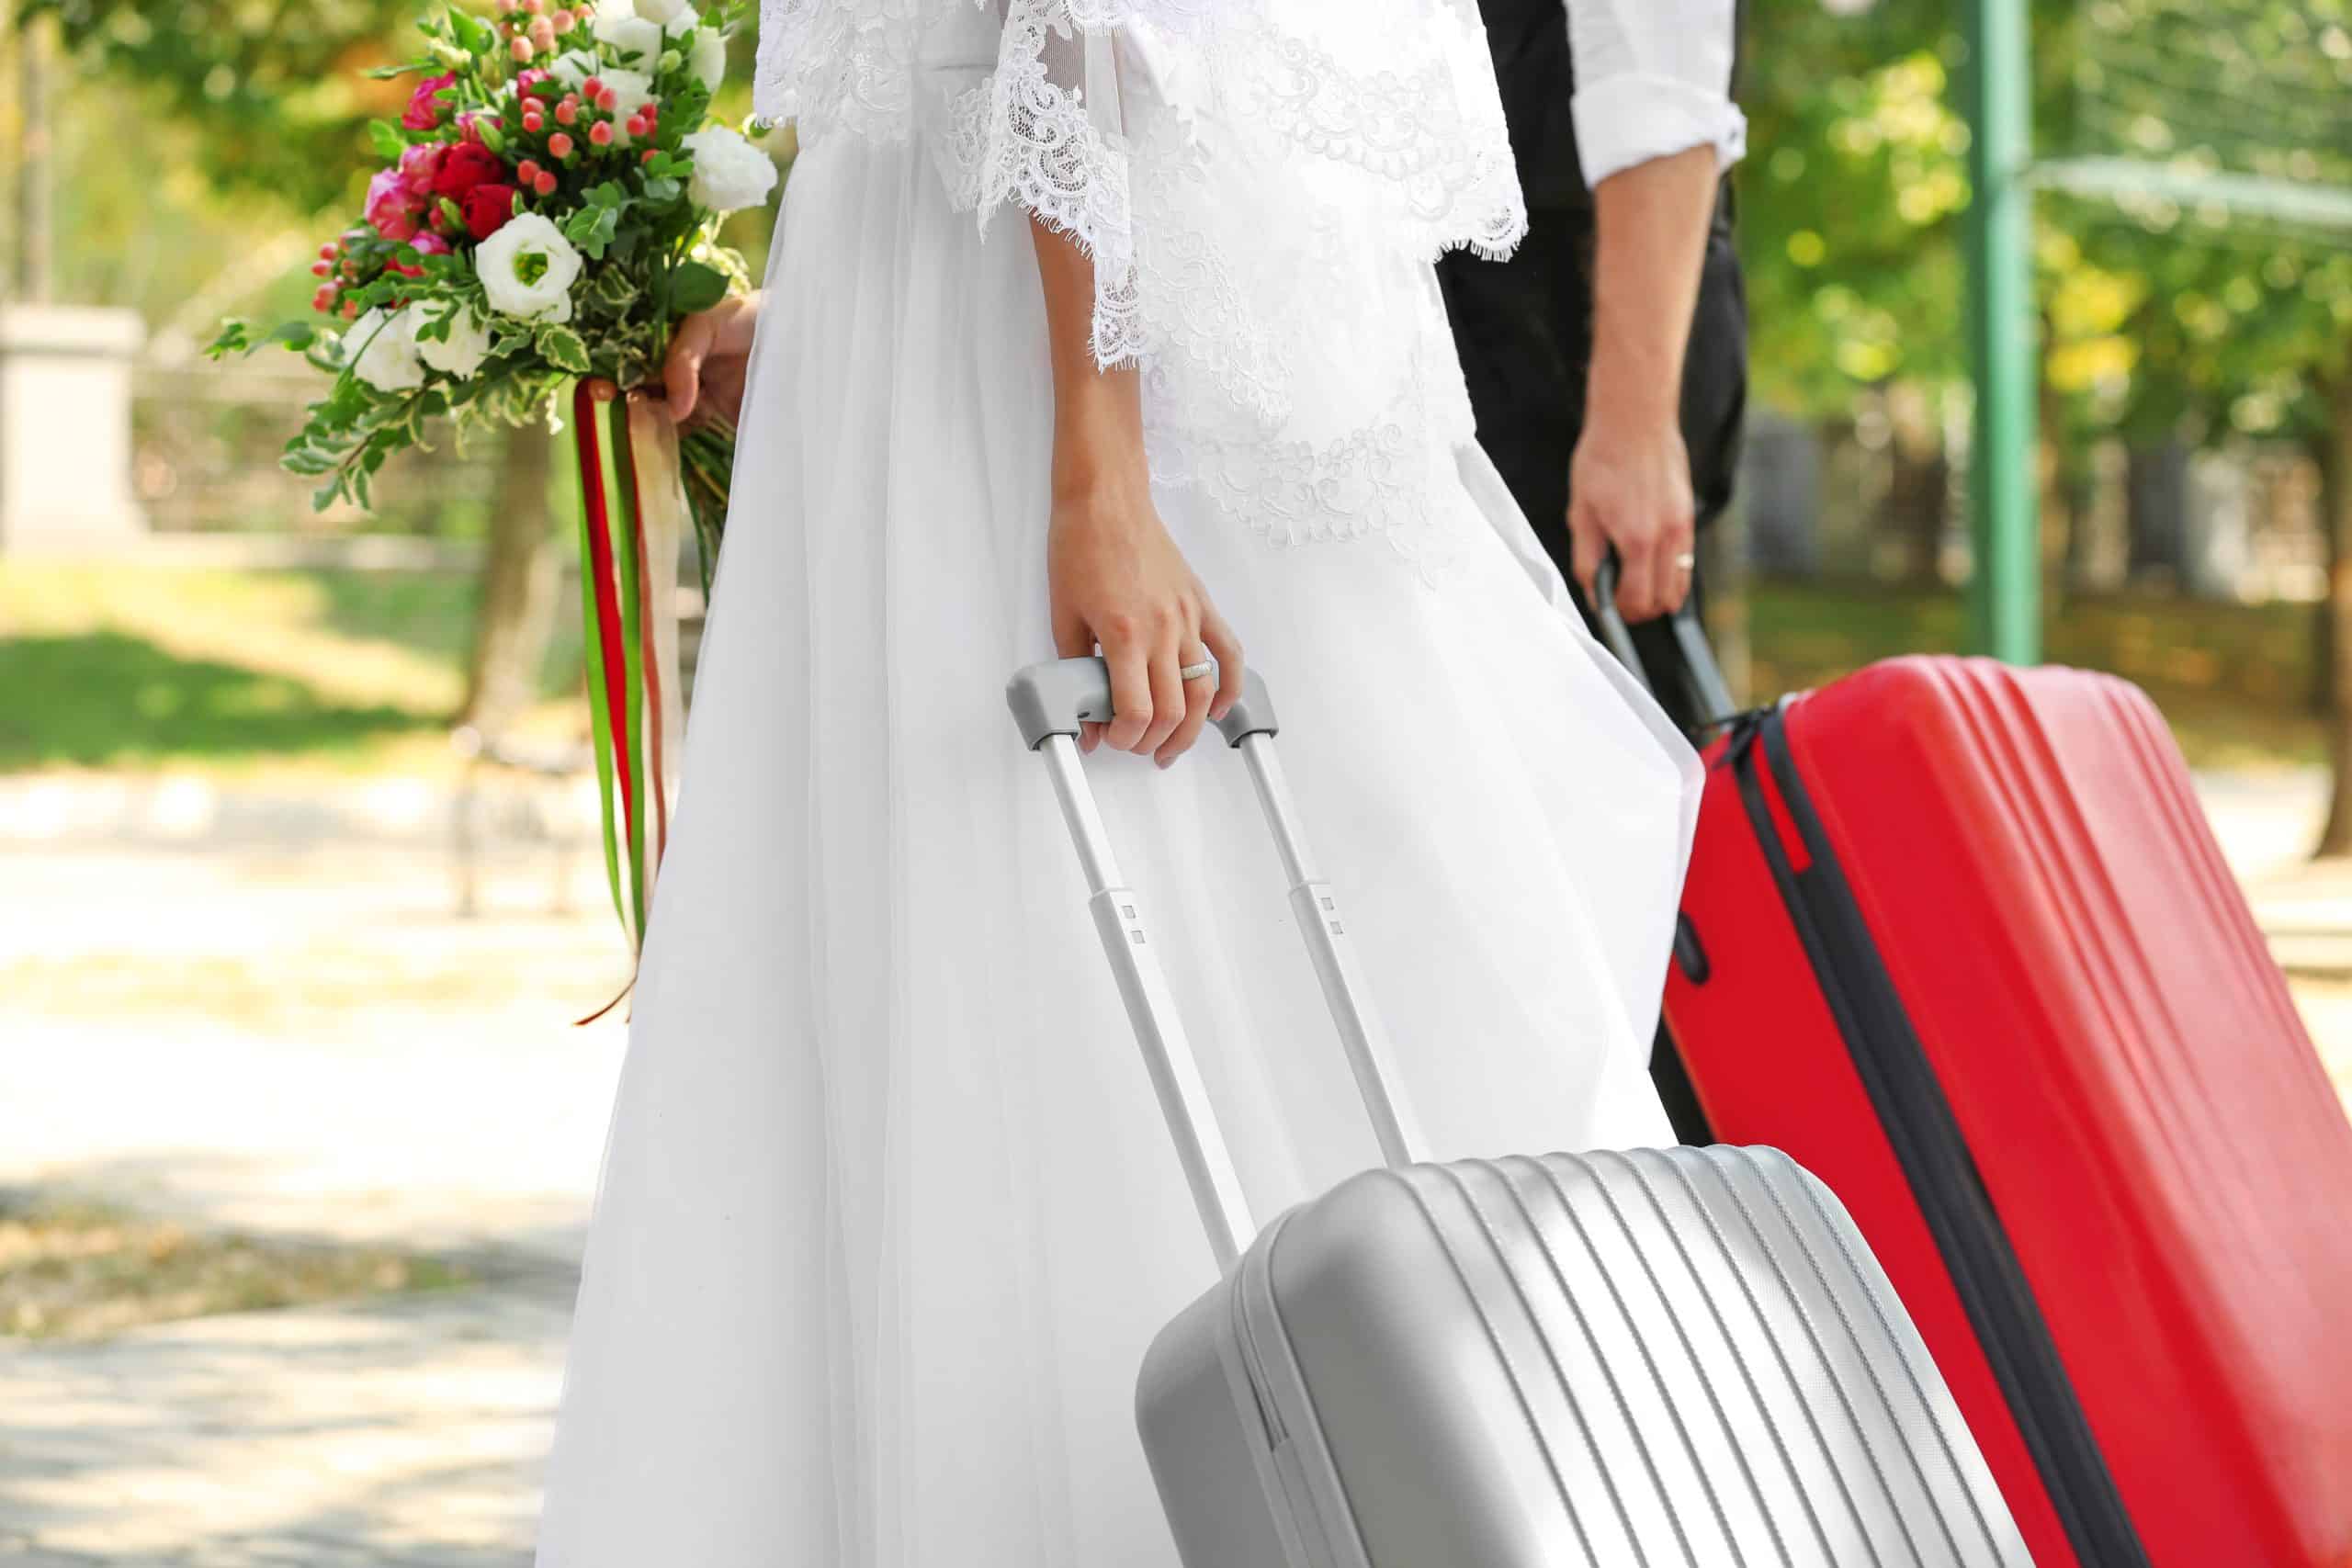 Wedding Dress Garment Bags & Packing Essentials for Bride